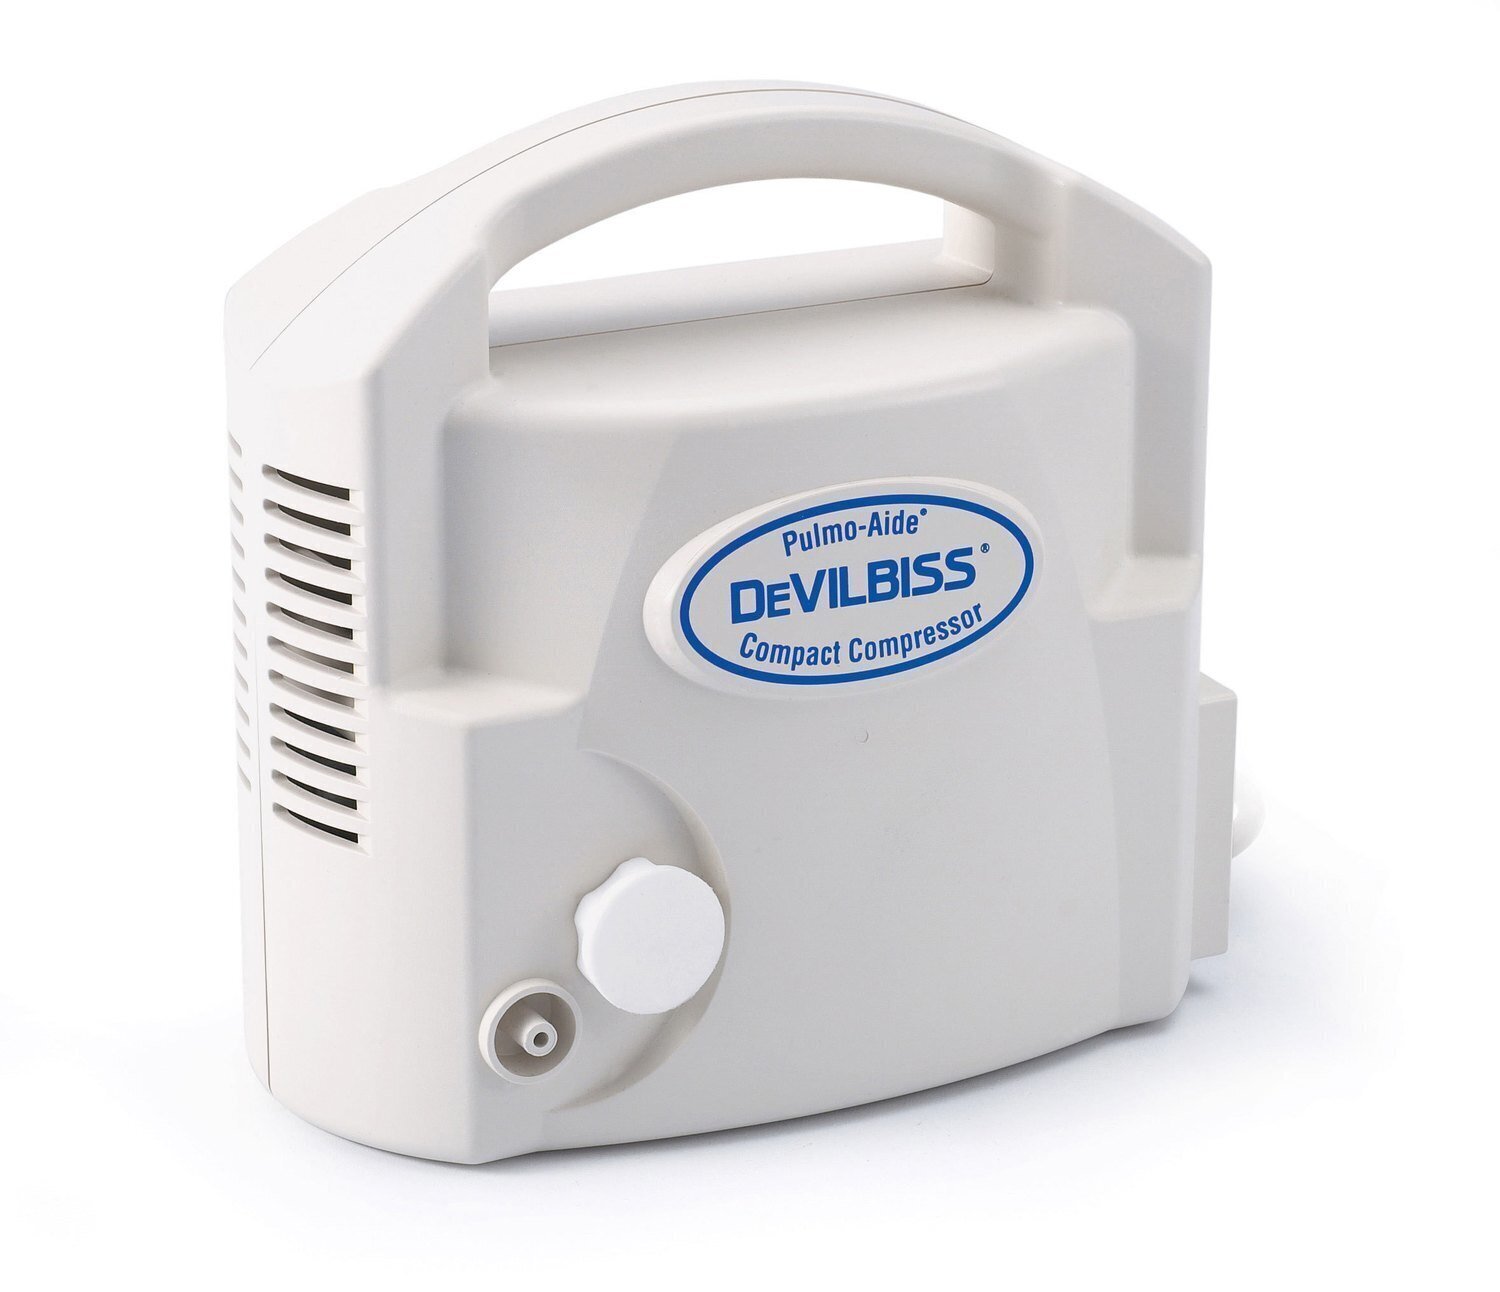 Drive/Devilbiss Healthcare Pulmo-Aide Compact Compressor Nebulizer System